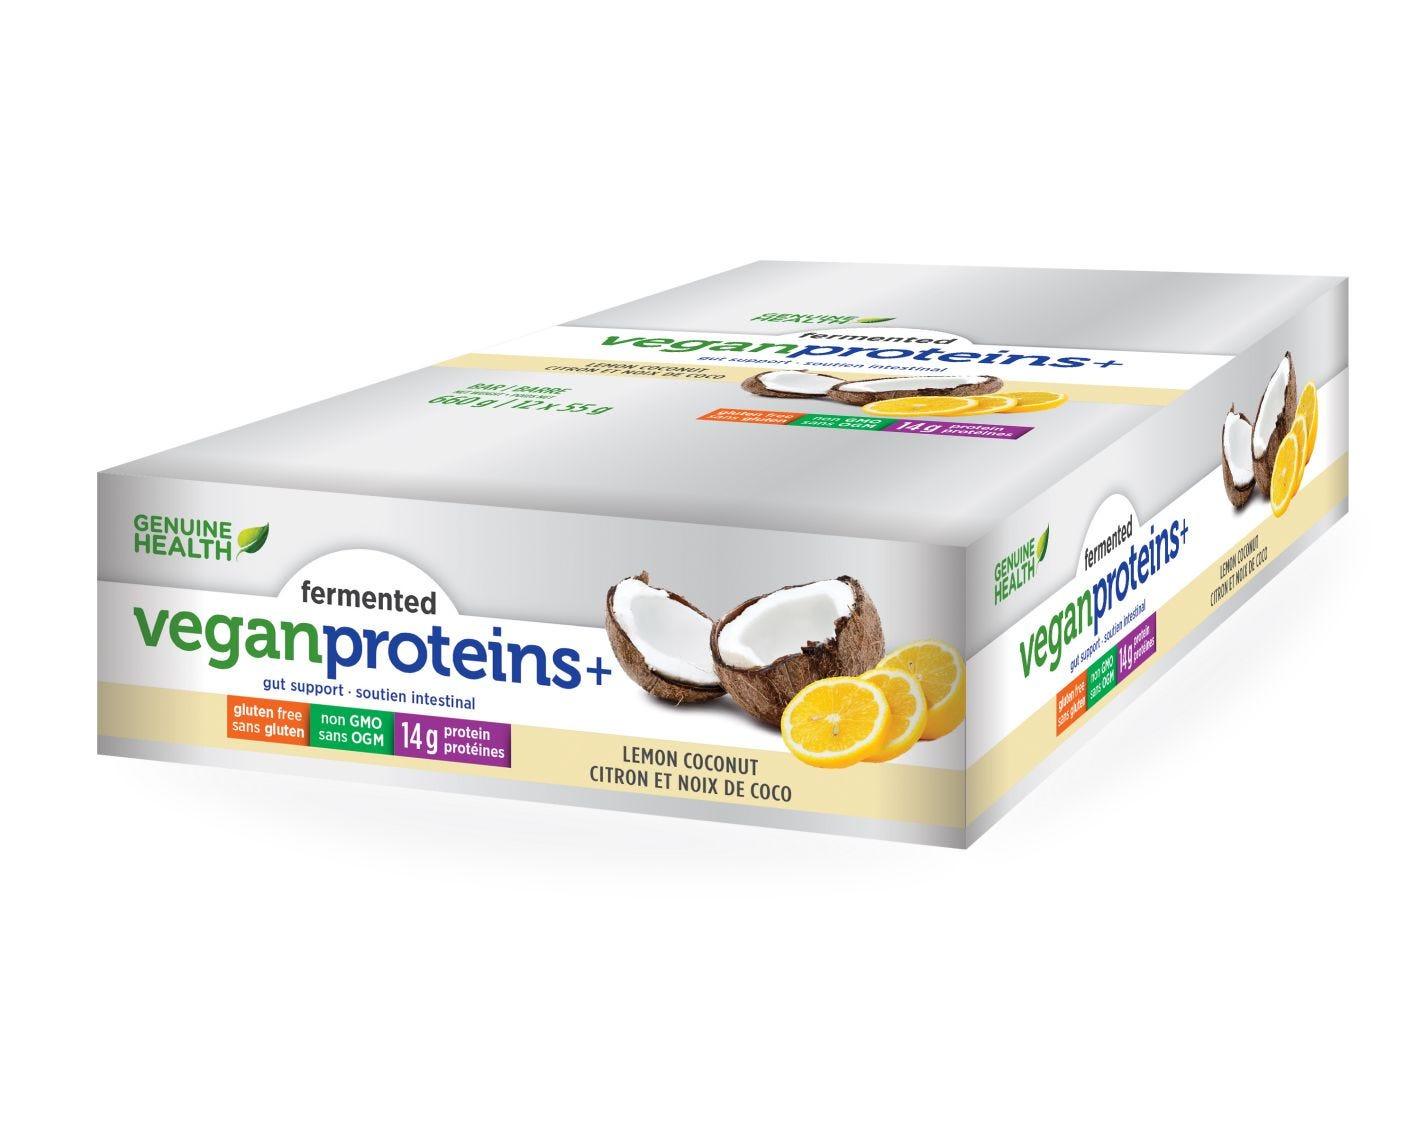 Genuine Health fermented Vegan proteins+ bar - Lemon Coconut